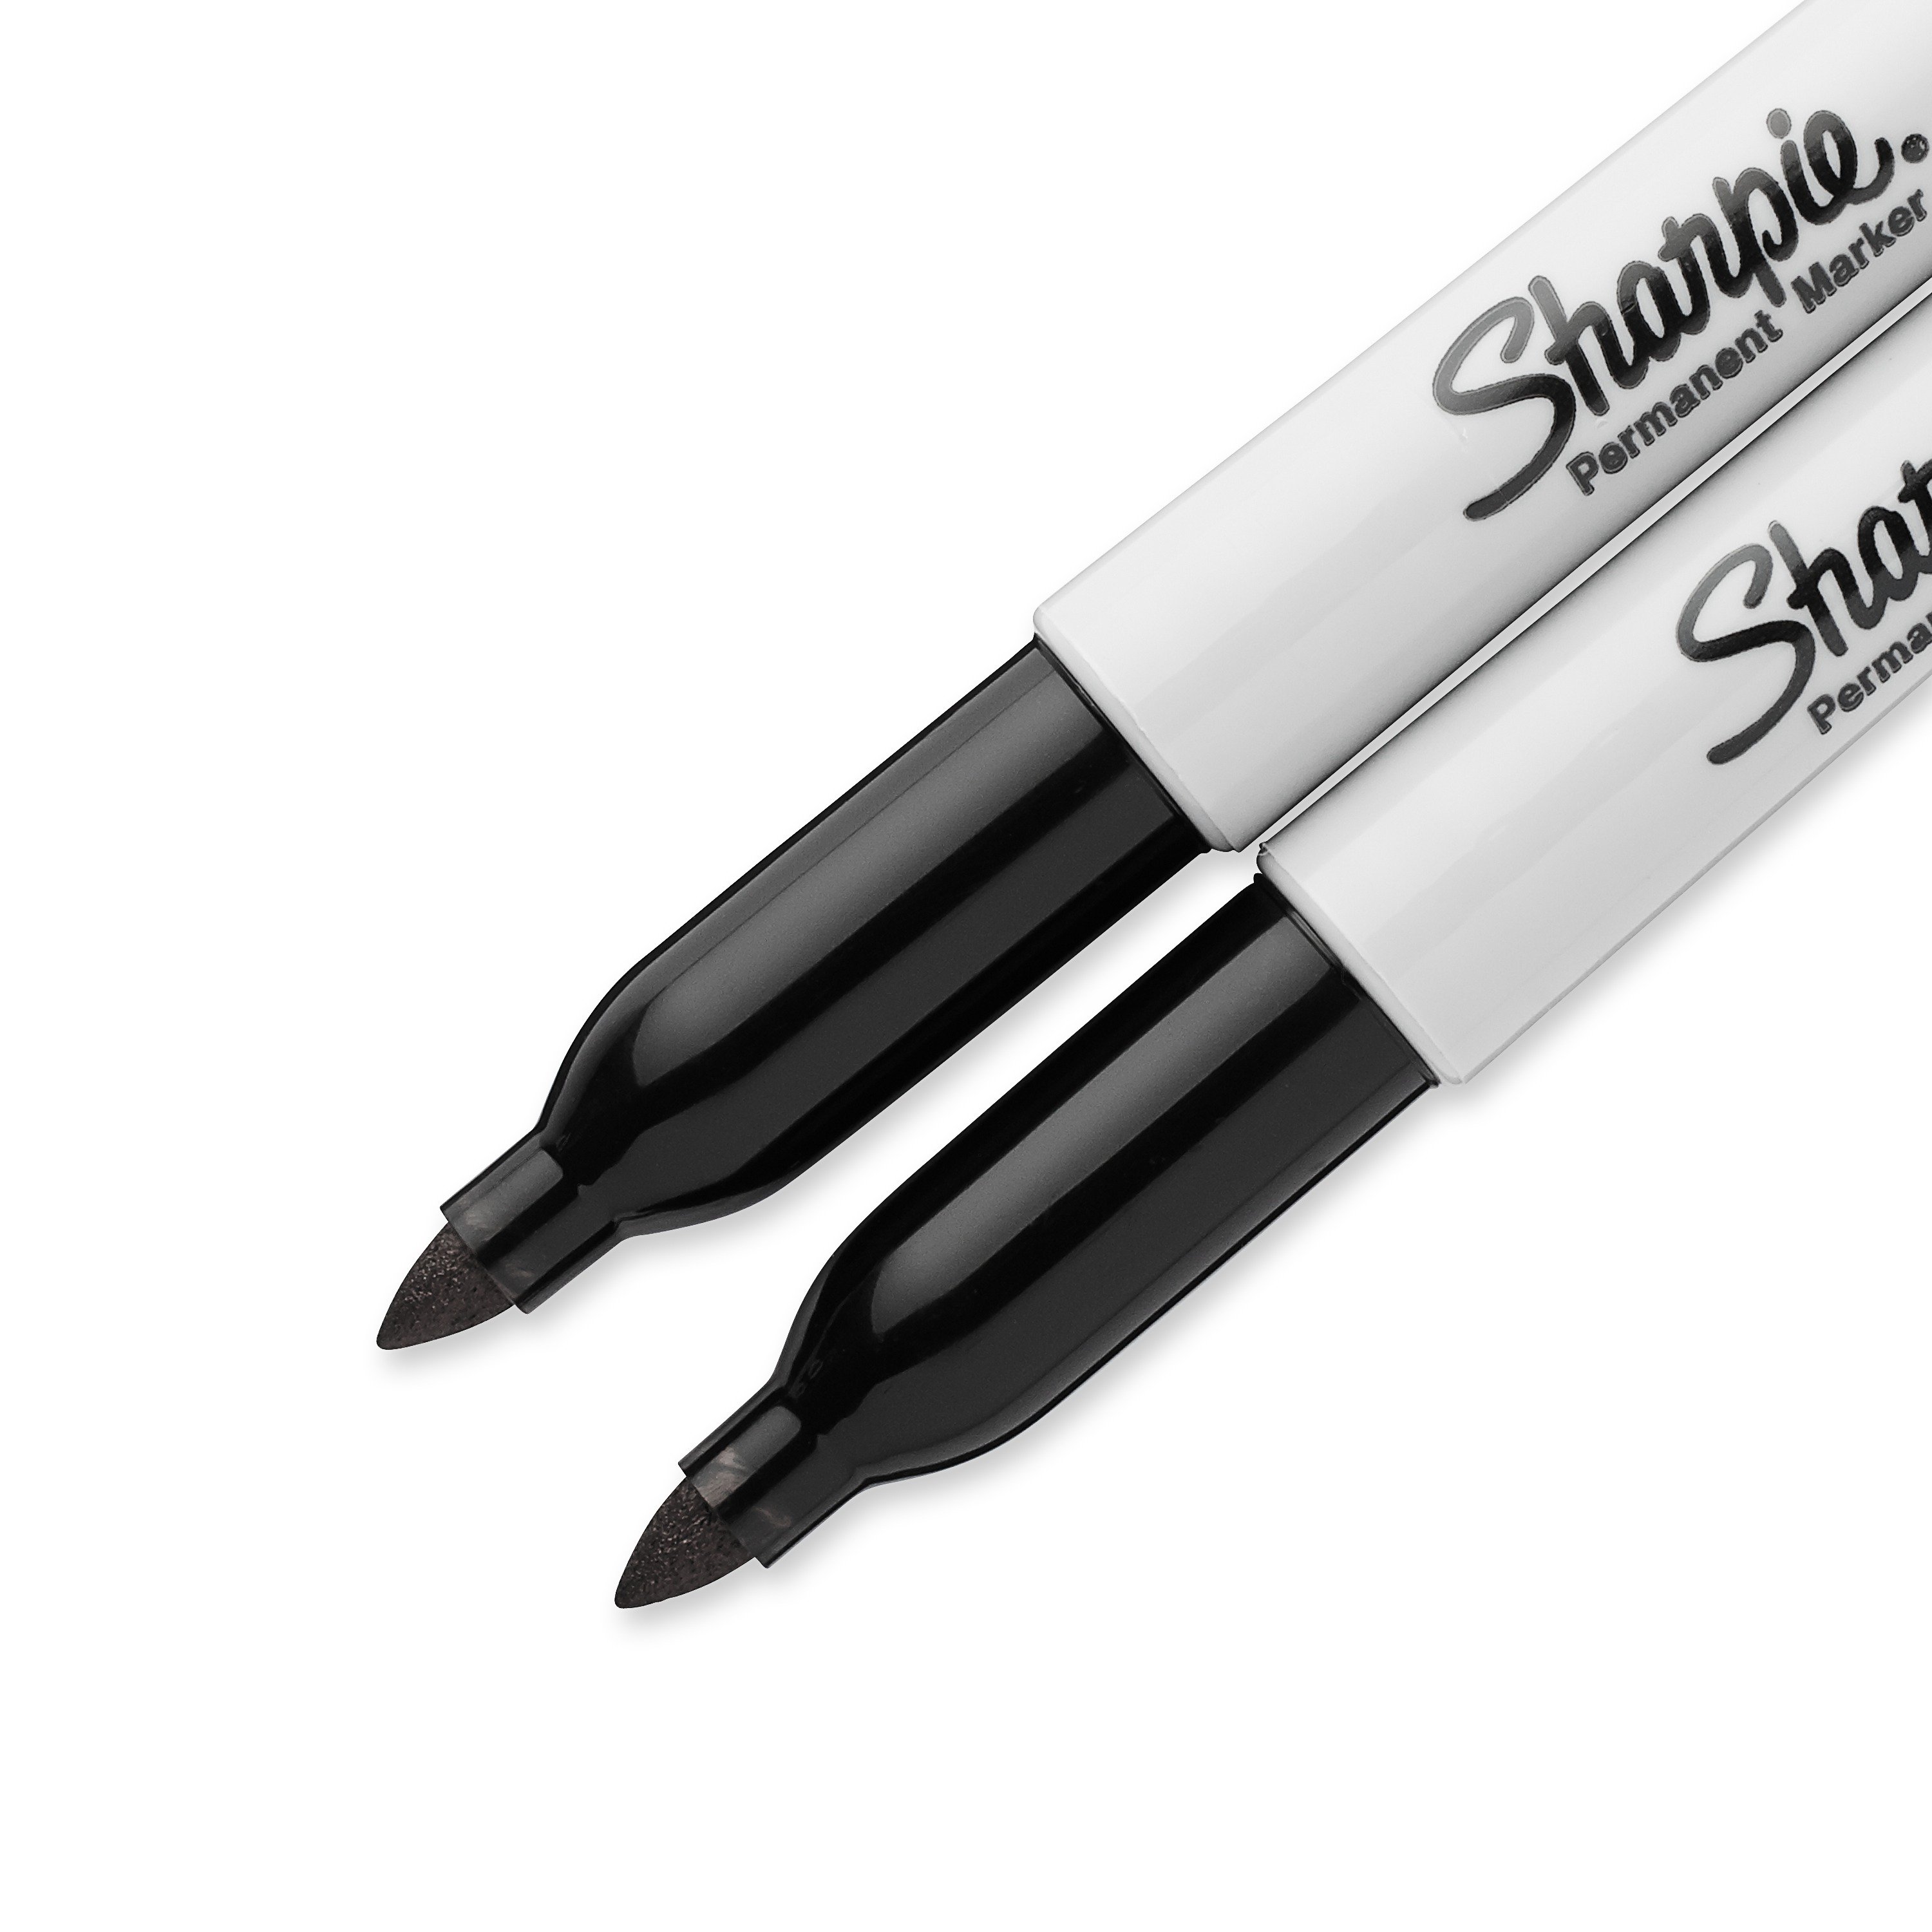 Sharpie Extreme Markers - Black, Pkg of 2